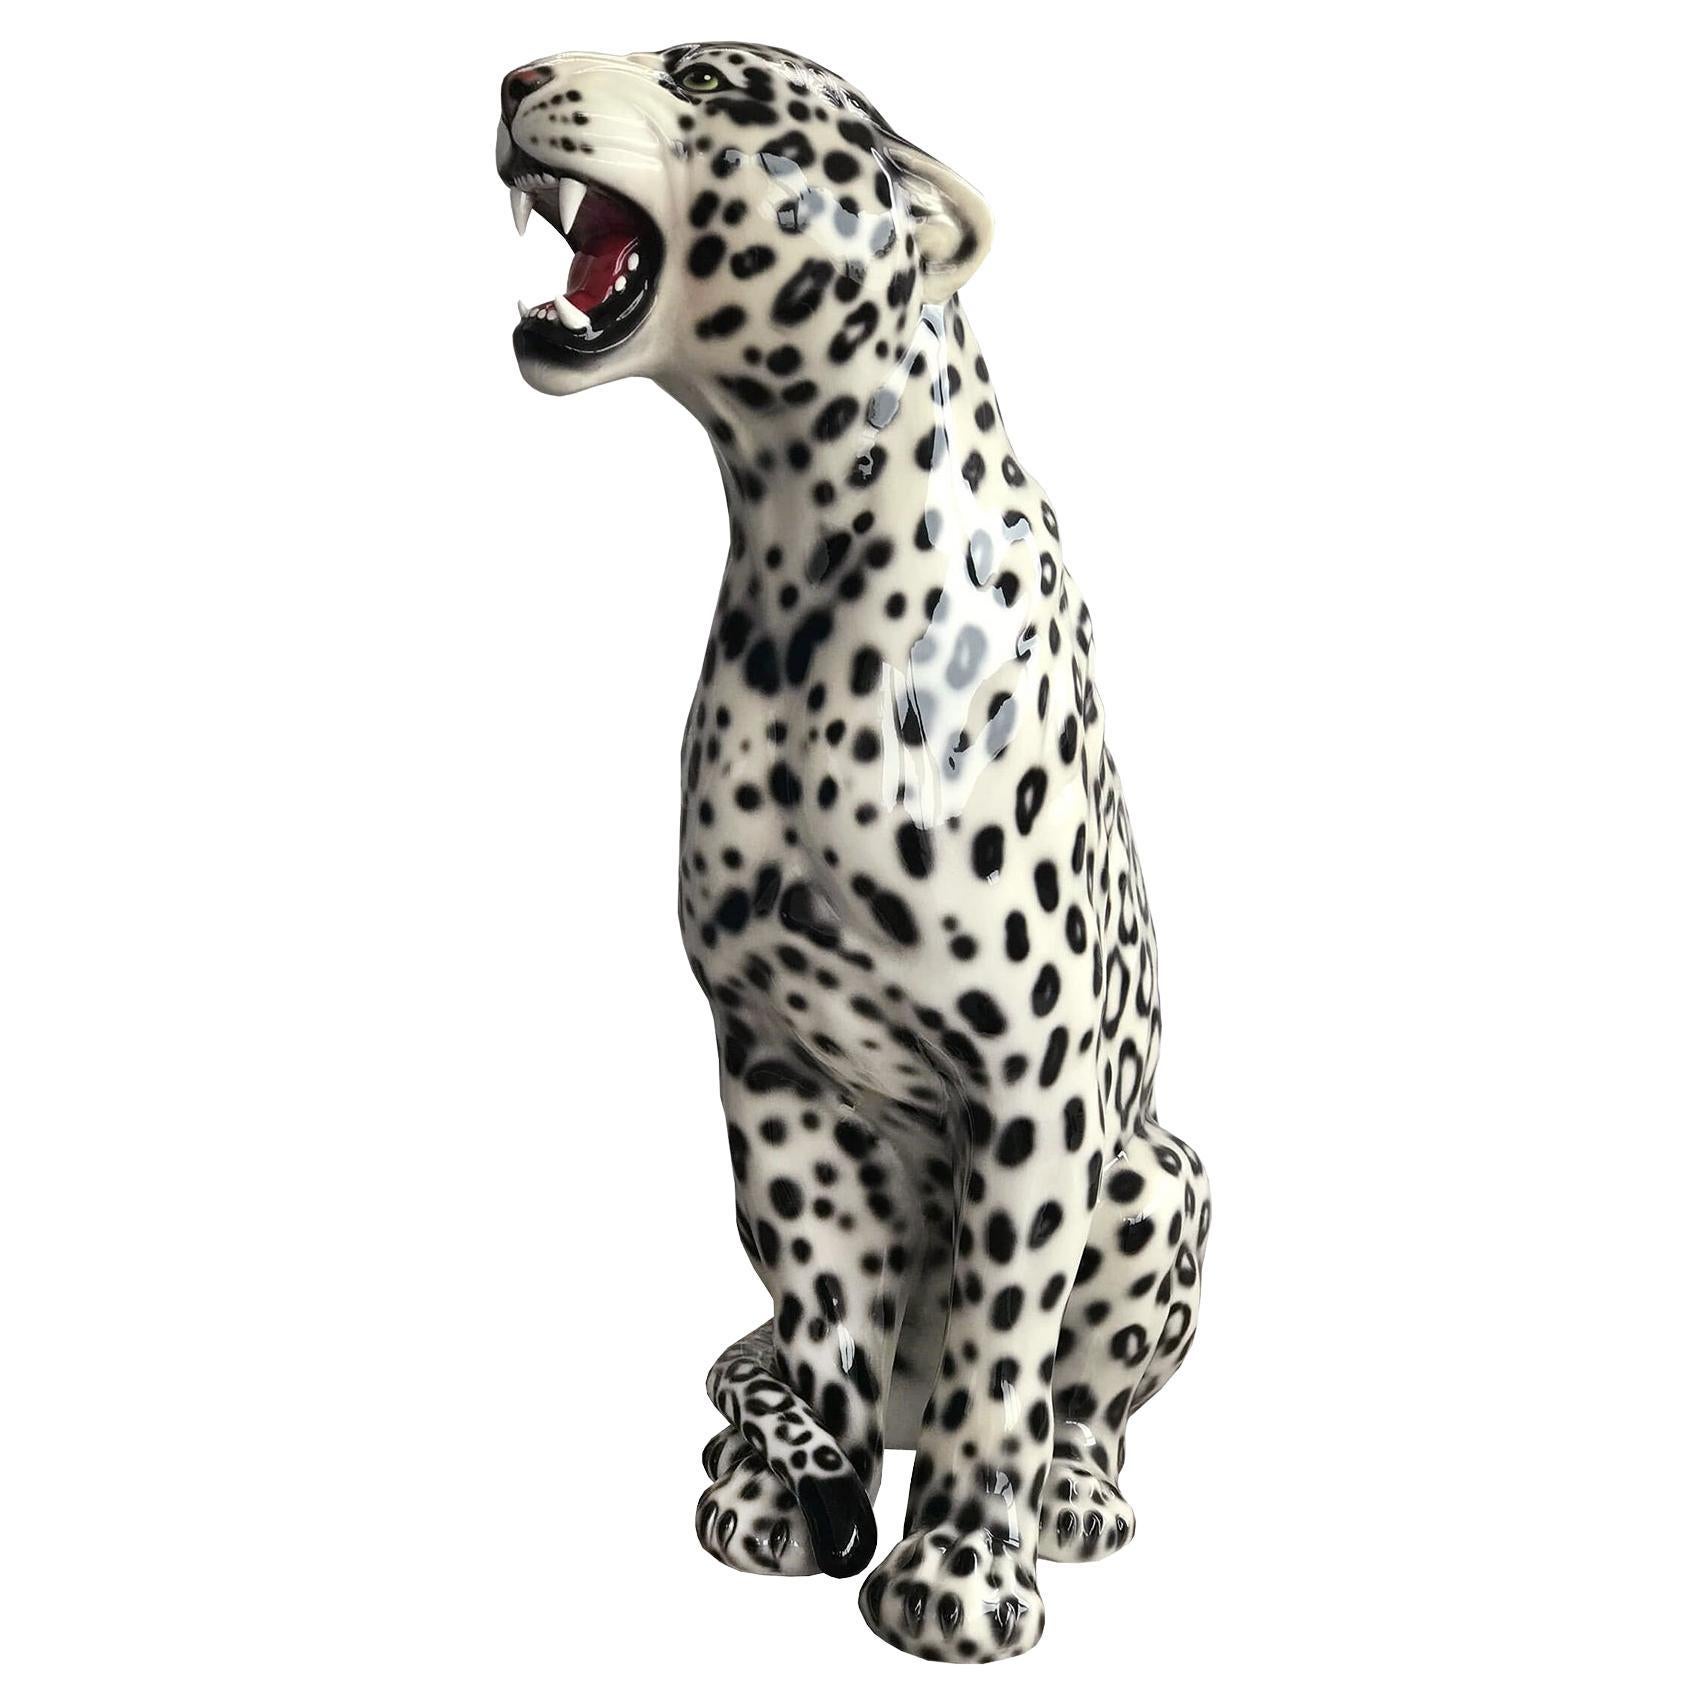 Leopard Black and White Left Sculpture For Sale